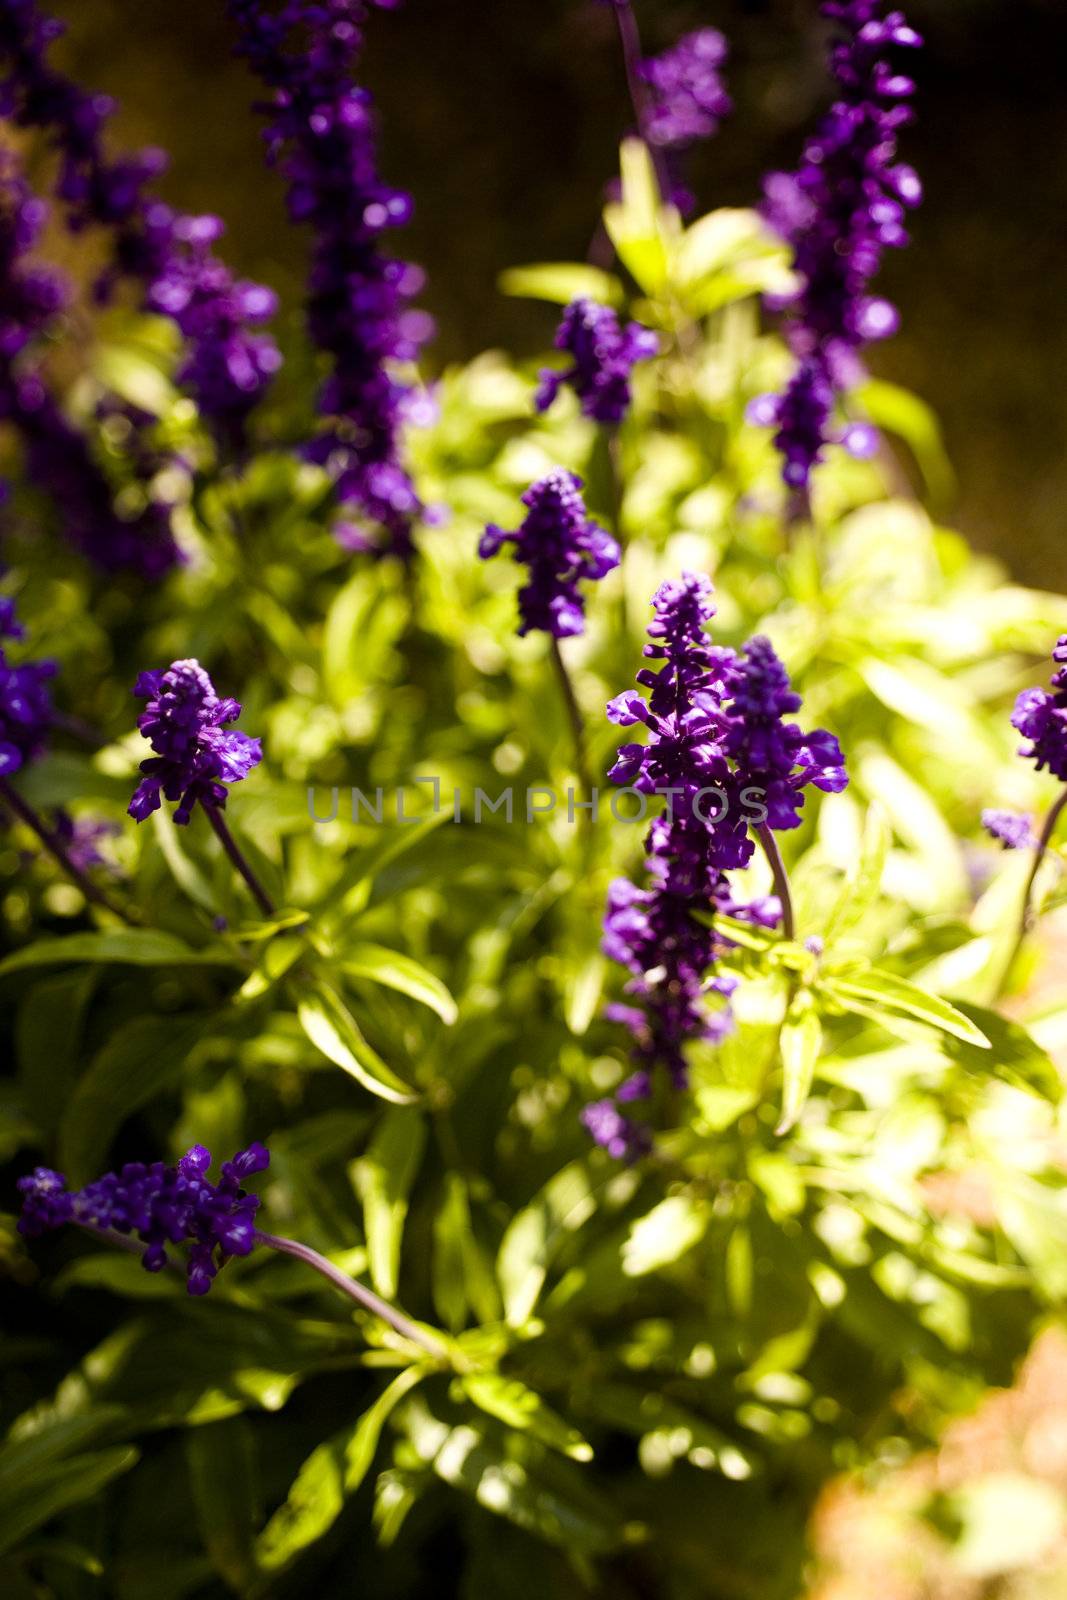 castle's garden macro shot of a violet flower